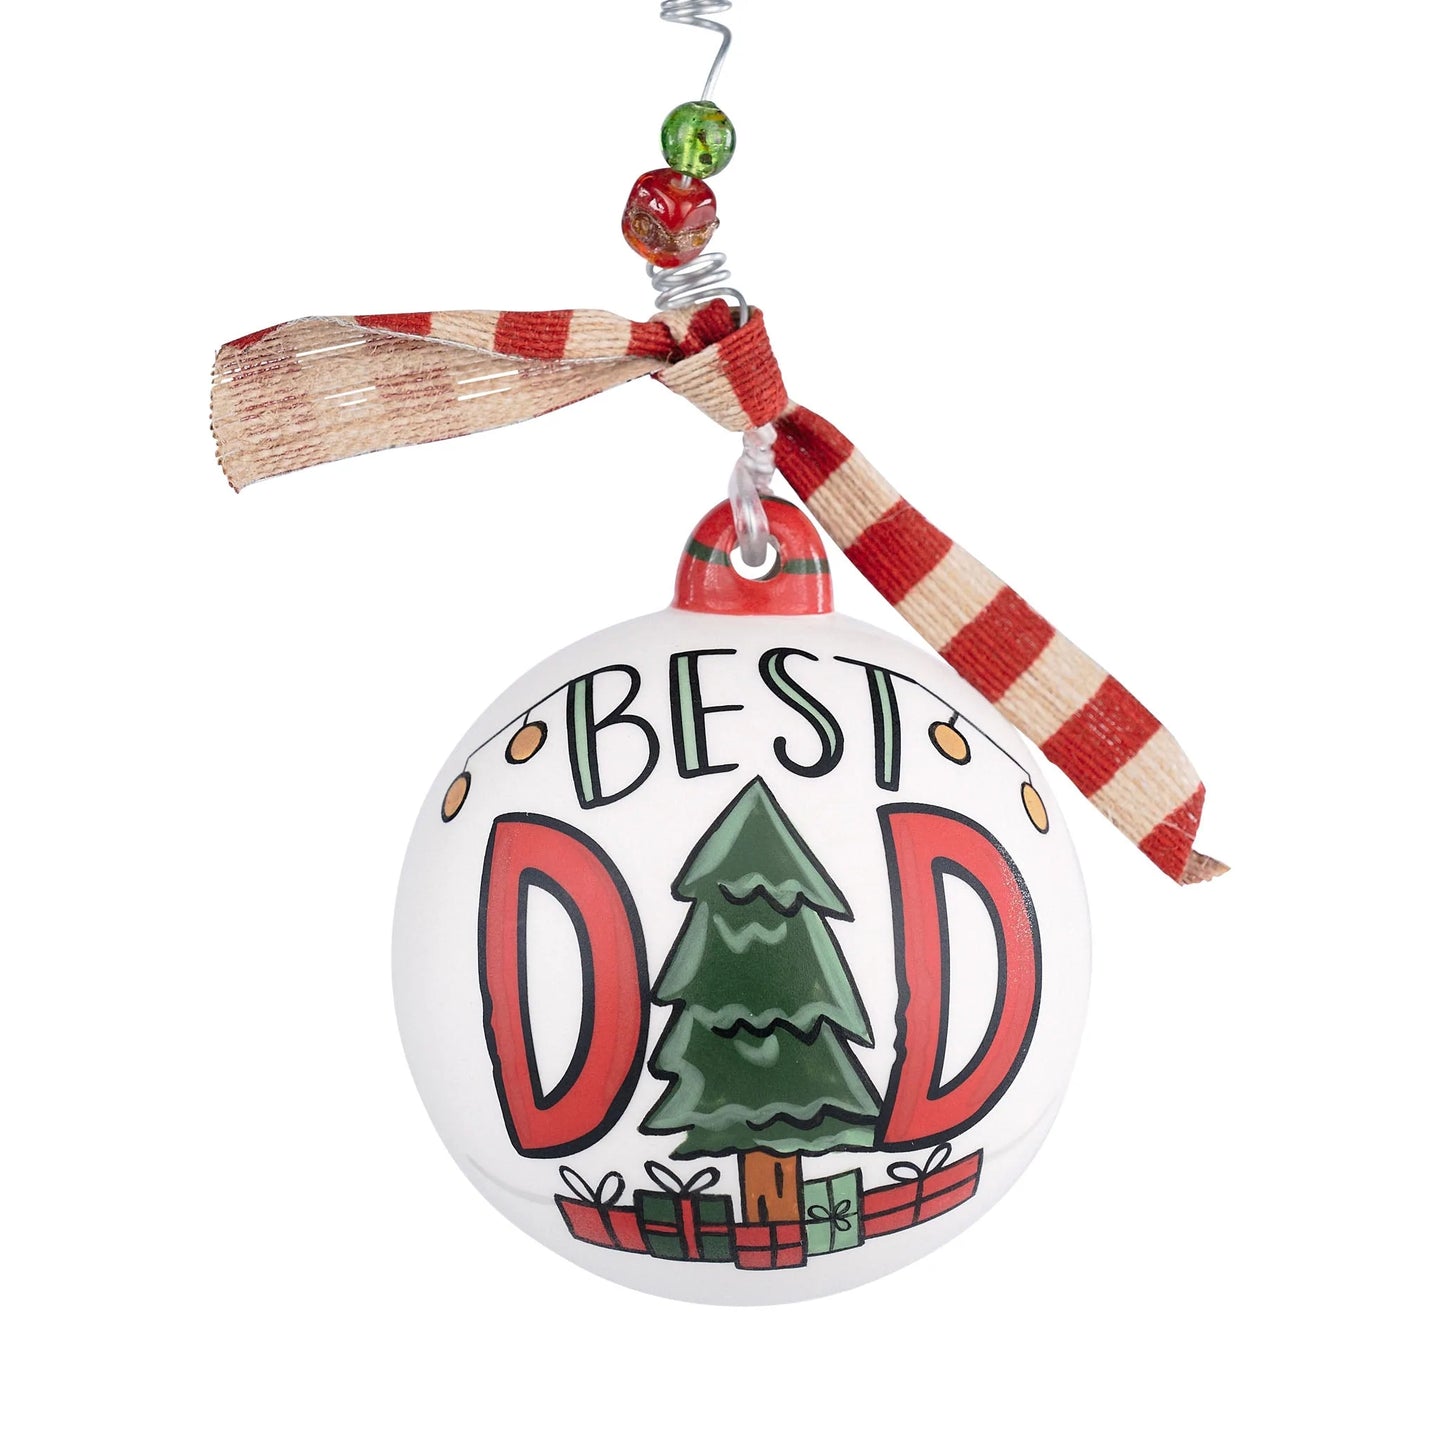 Best Dad Christmas Tree Ornament